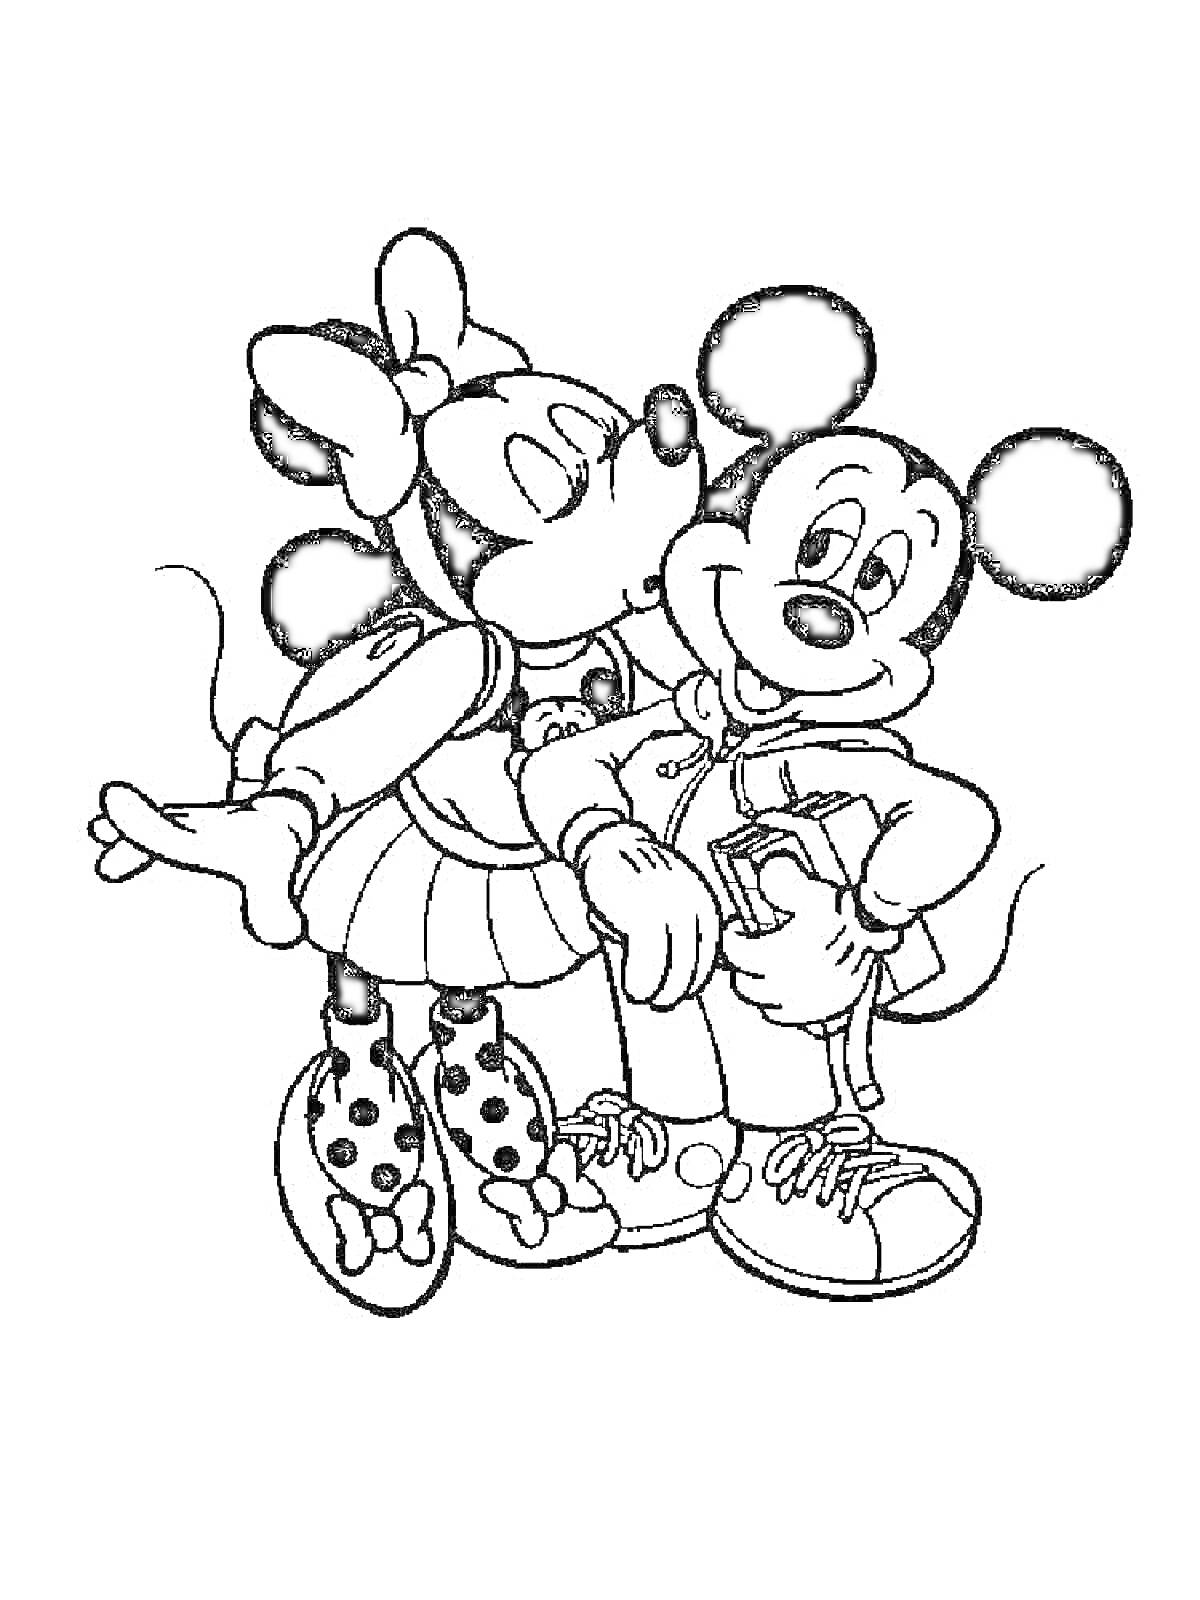 Раскраска Микки Маус и Минни Маус в обнимку, Минни целует Микки и держит его за руку, оба в одежде и обуви, Минни носит бантик и юбку